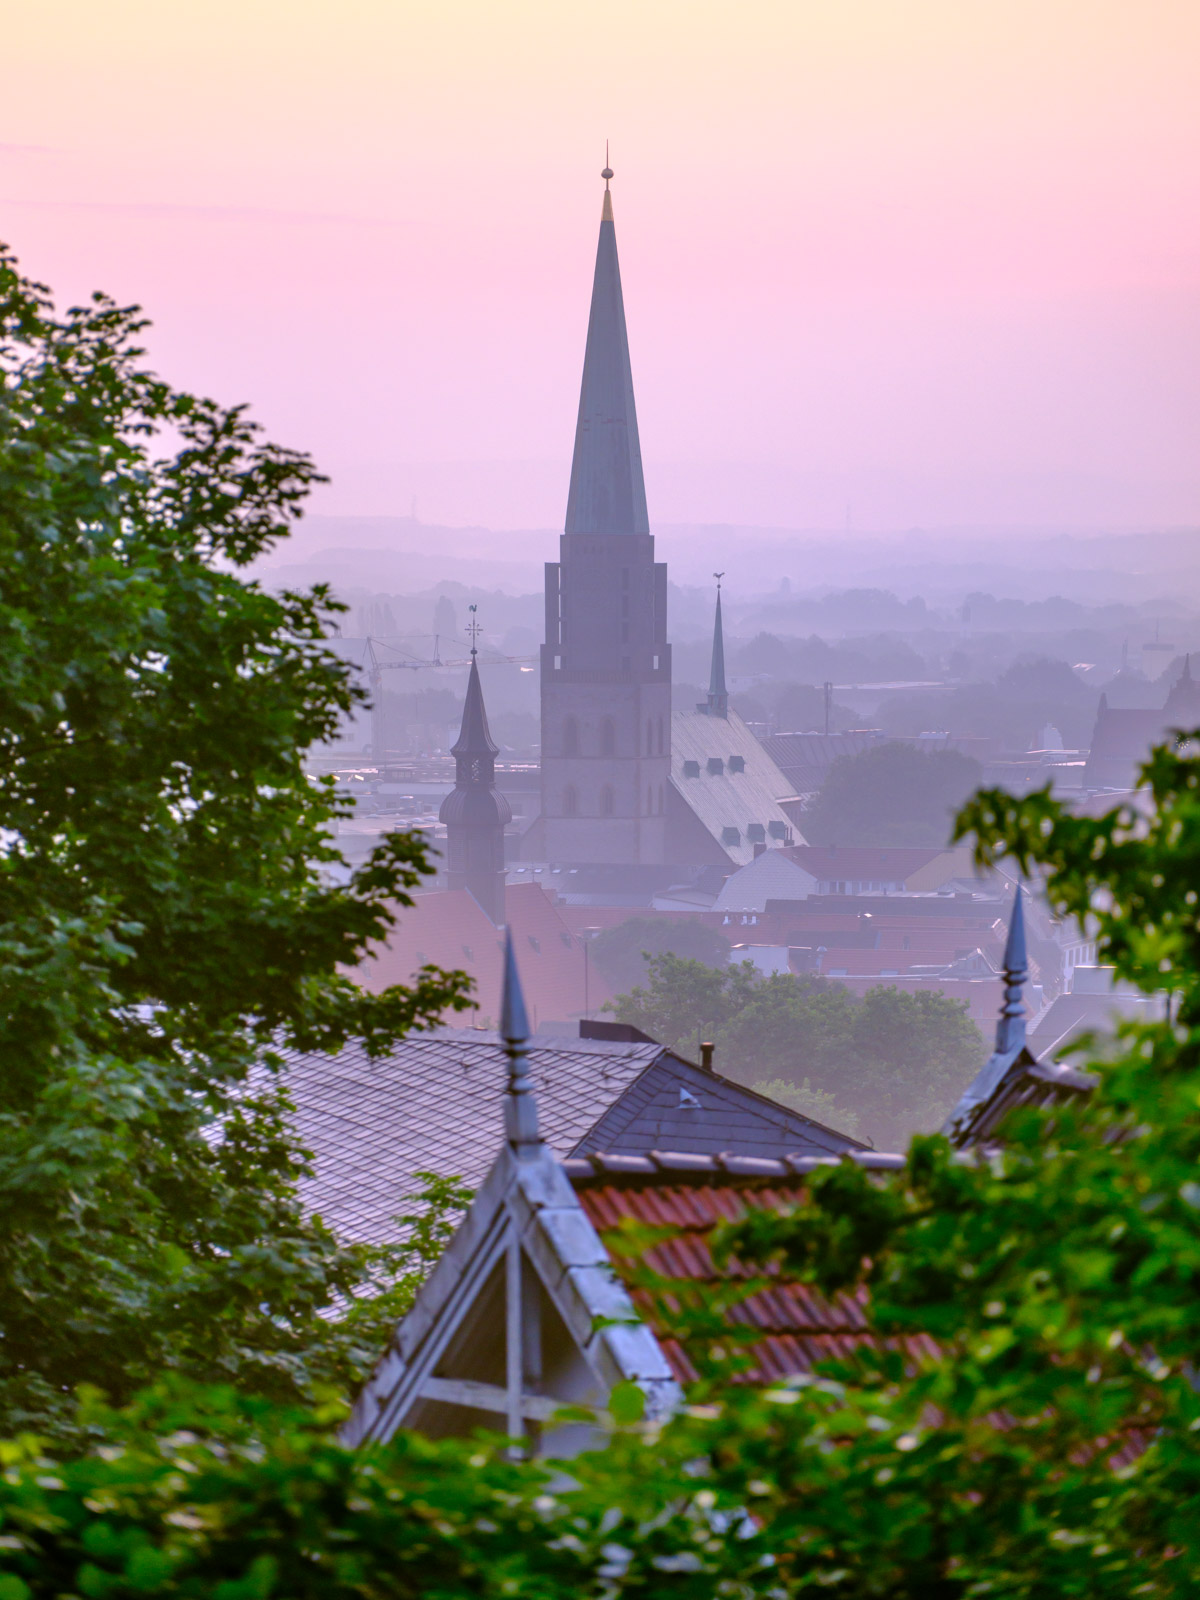 Tower of Nikolai Church at dawn in July 2021 (Bielefeld, Germany).